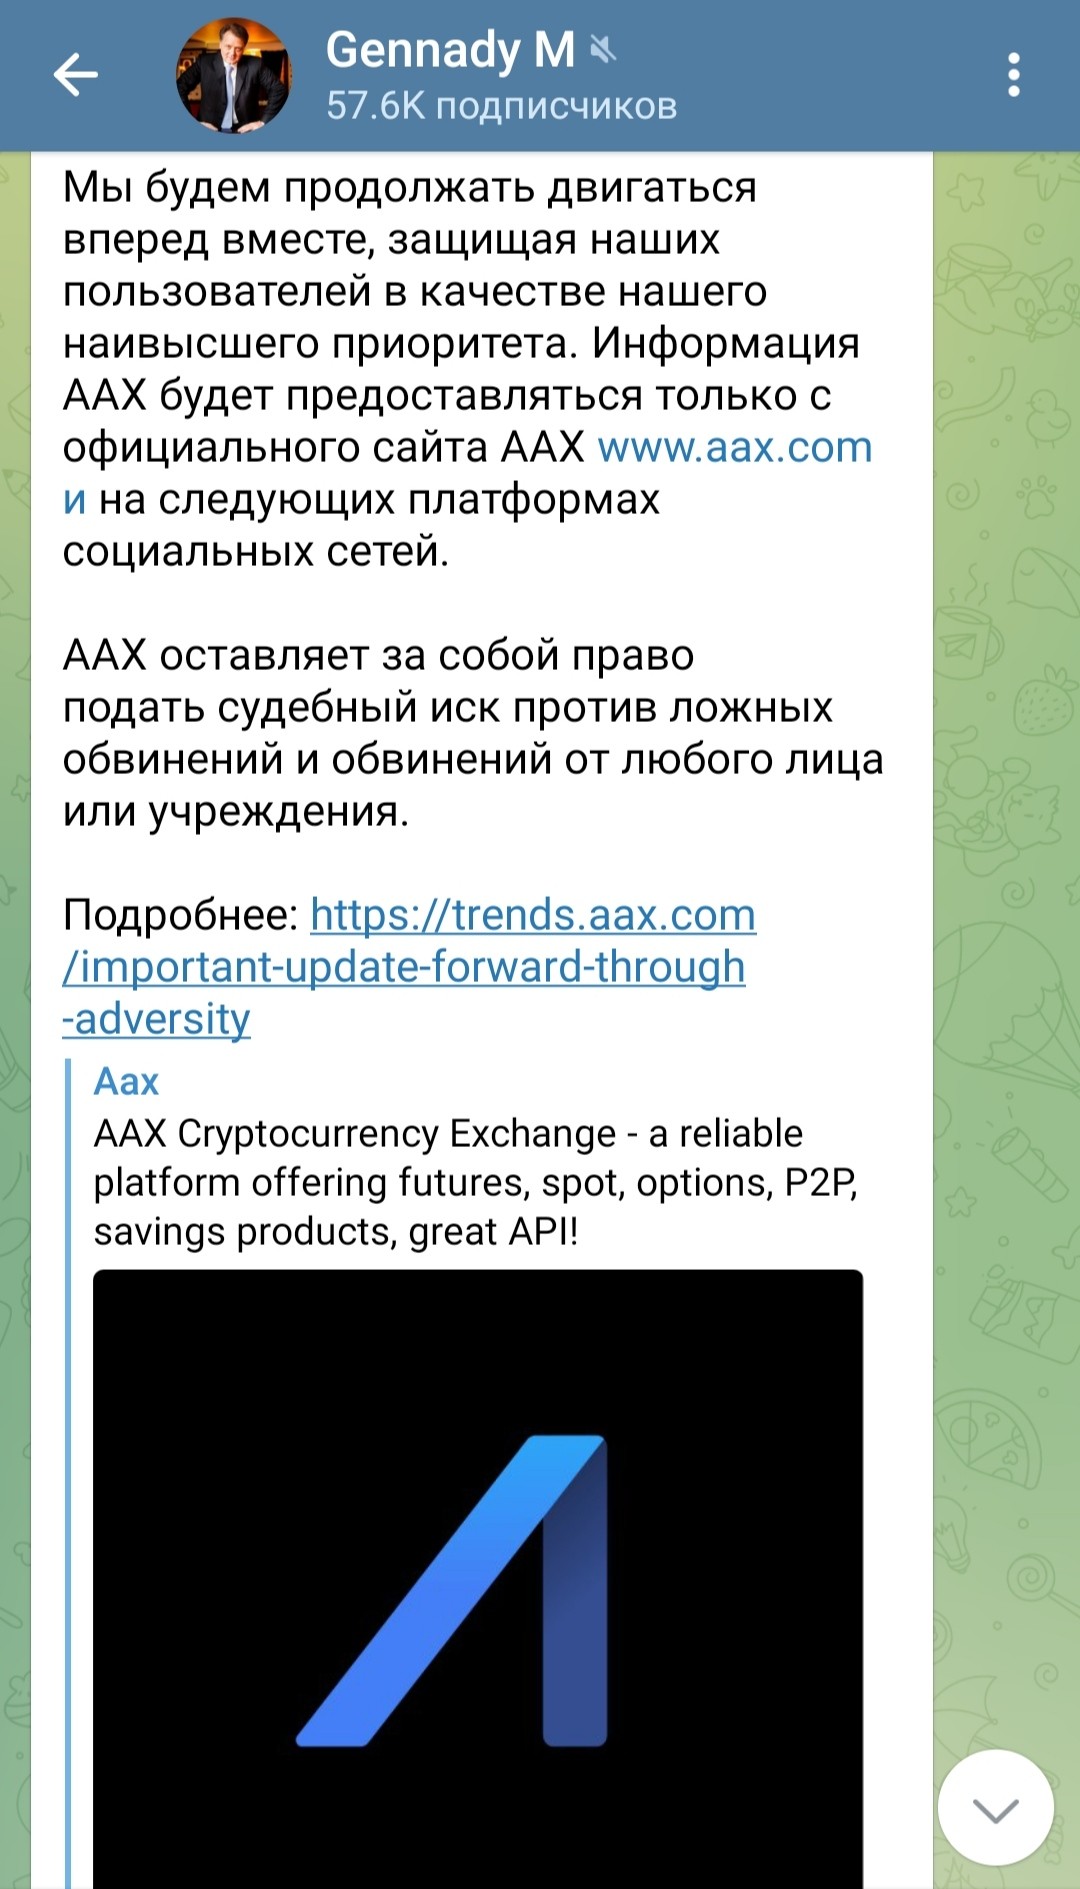 Gennady M телеграм пост биржа AAX